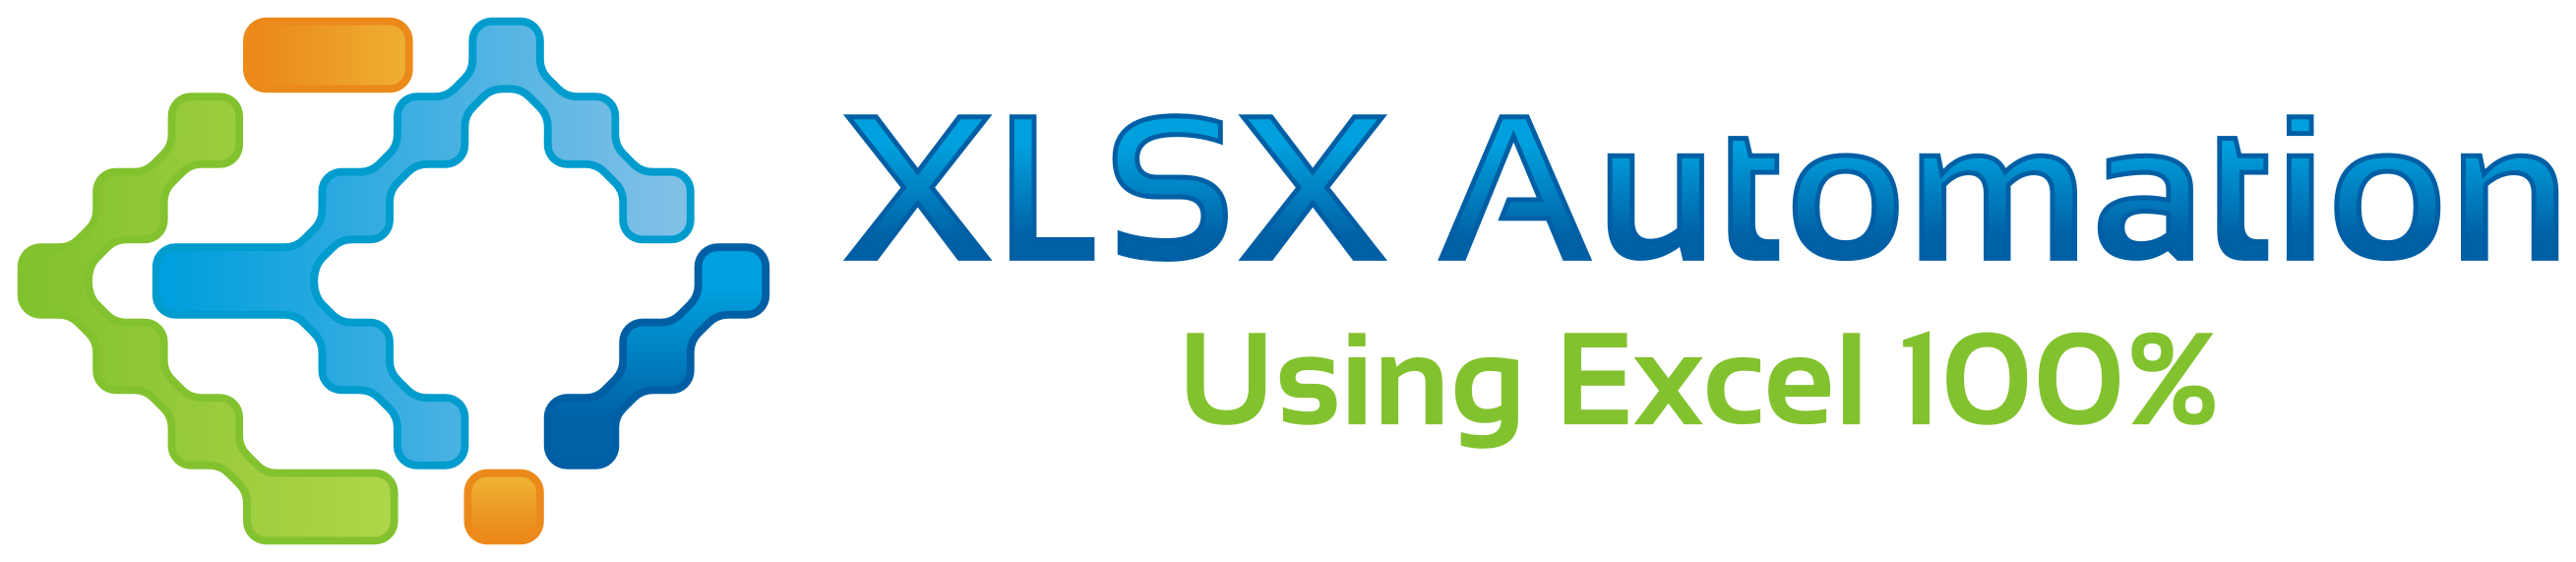 XLSXAutomation logo